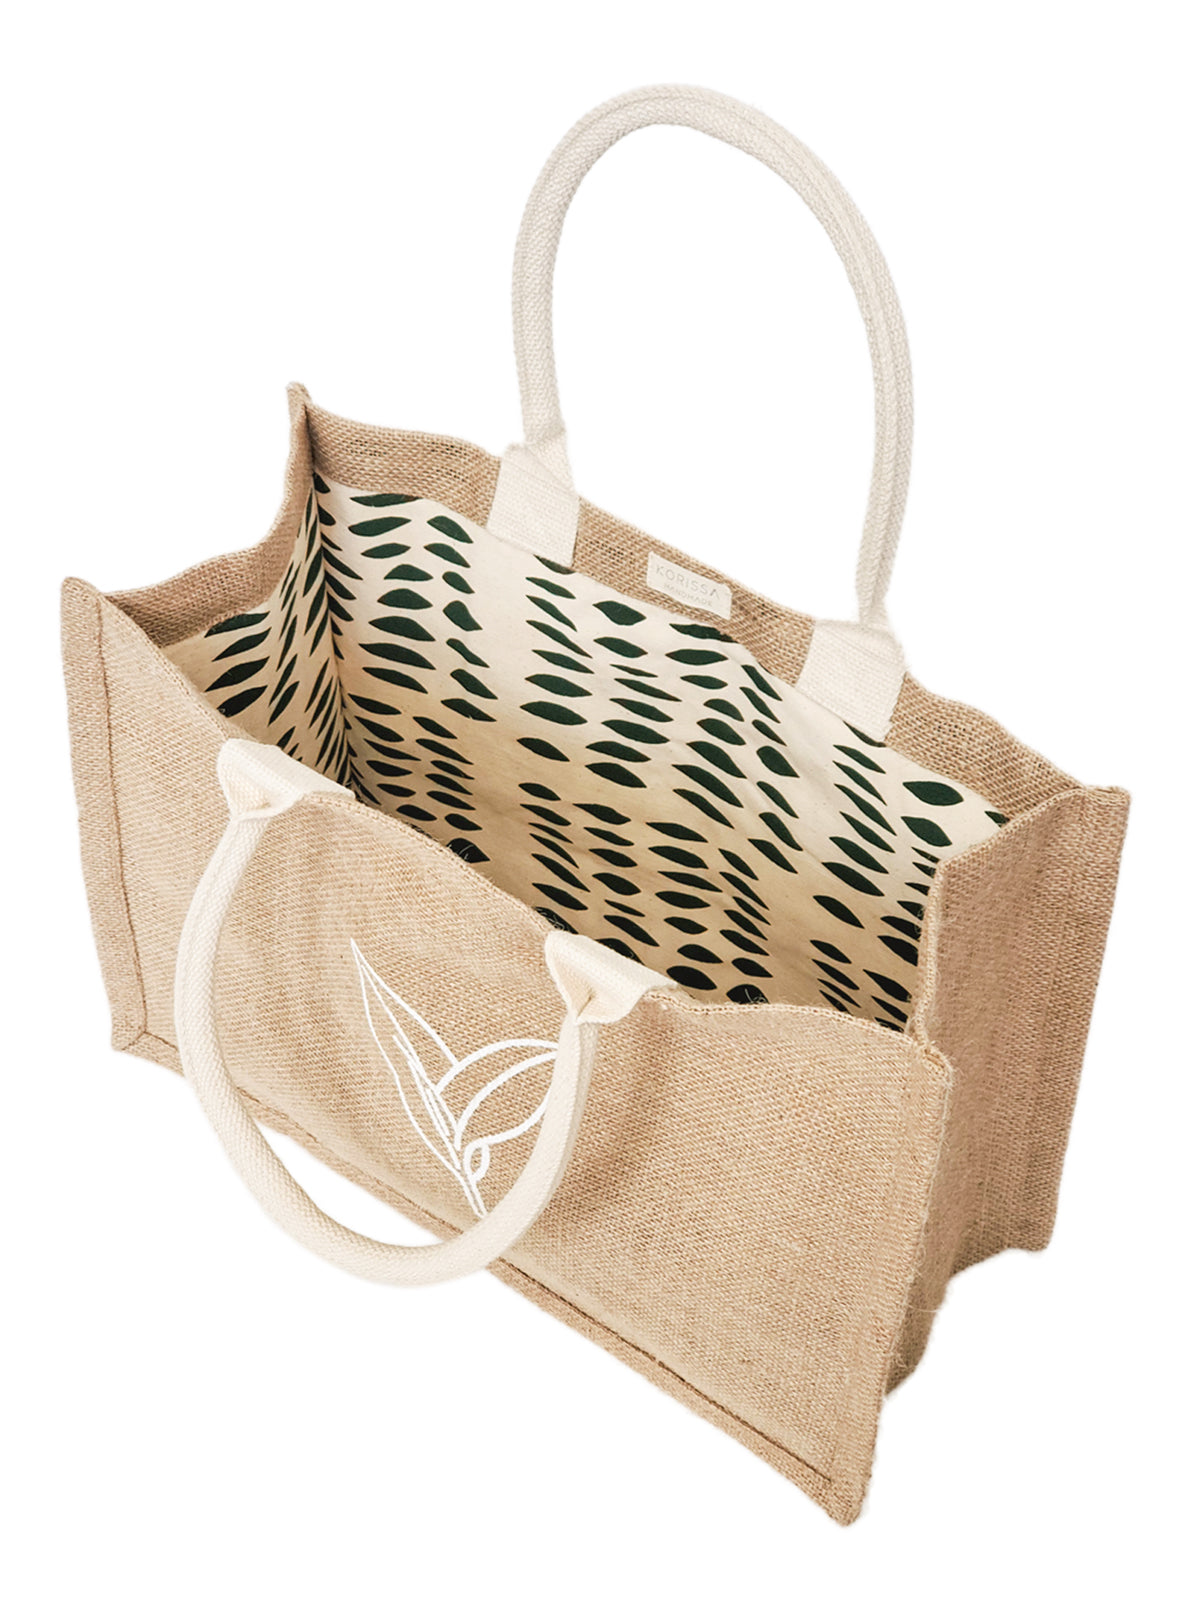 Jute Canvas Shopping Bag - Nature-4